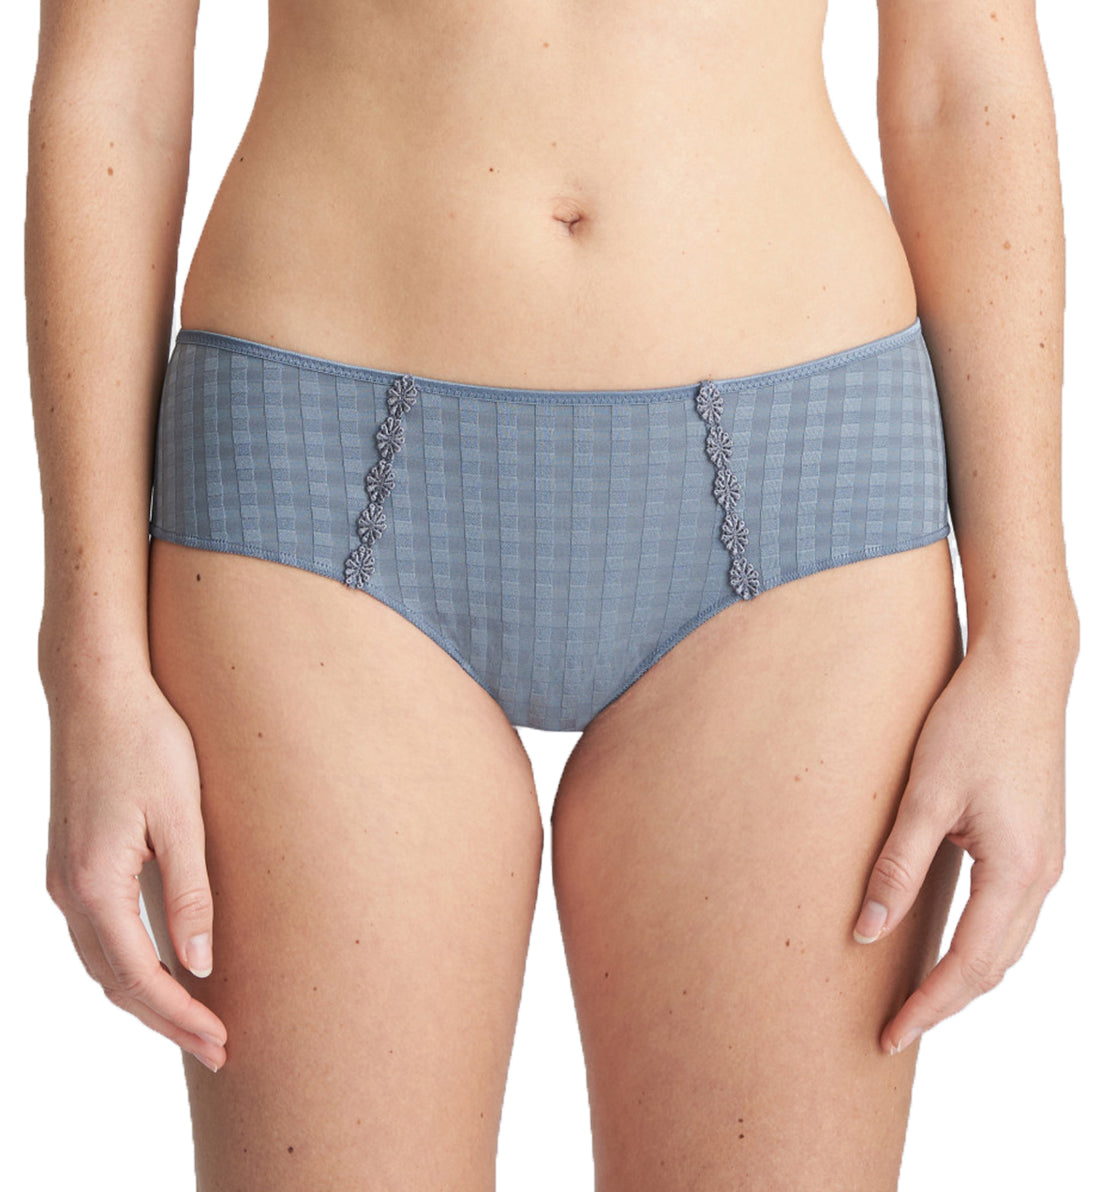 Marie Jo Avero Matching Hotpants Panty (0500415),Small,Atlantic Blue - Atlantic Blue,Small